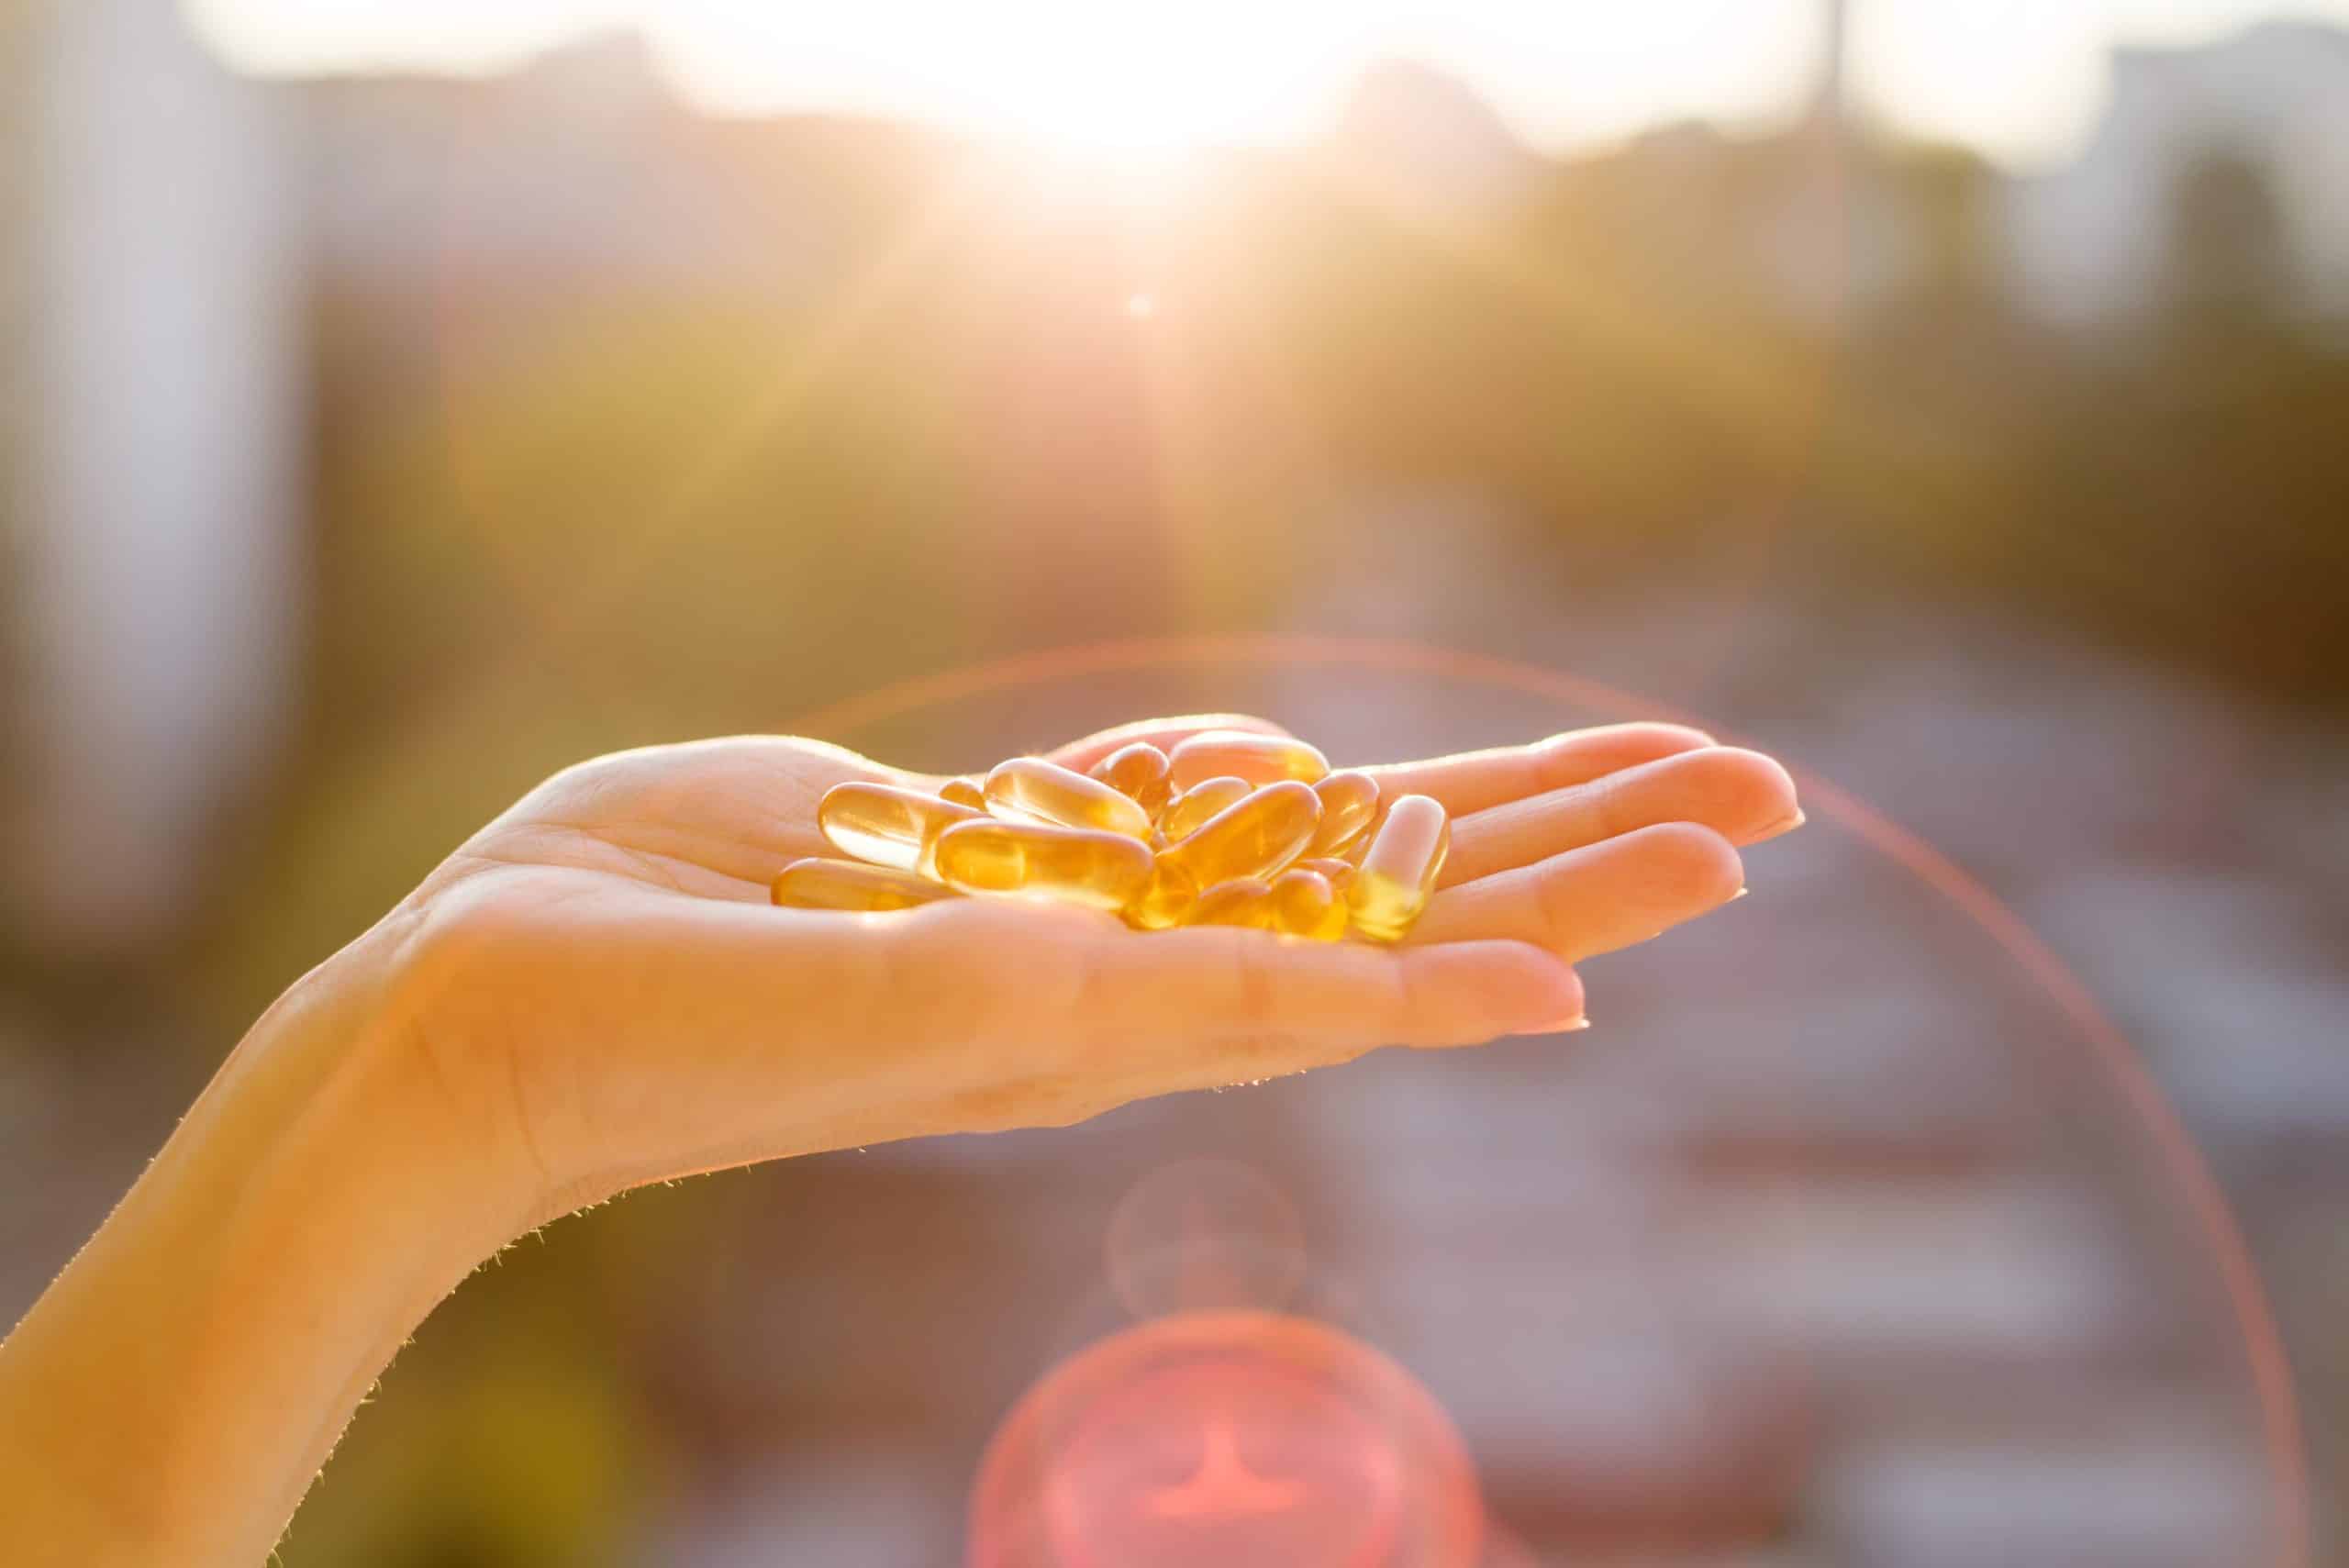 Vitamin D and its health benefits